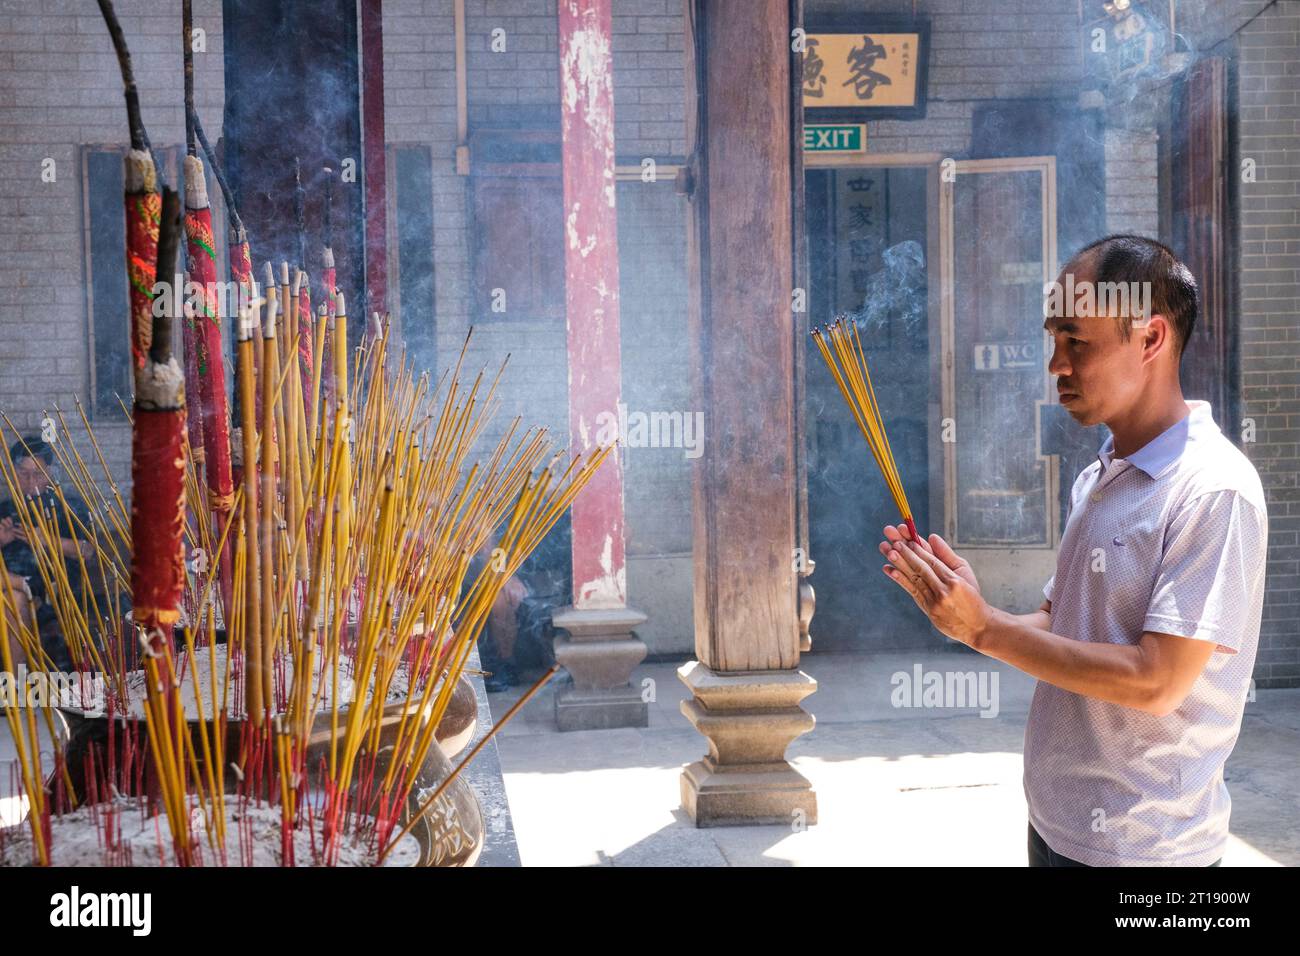 Worshipper Offering Incense before Statue of Lady Thien Hau, Goddess of the Sea, Thien Hau Pagoda, Ho Chi Minh City, Vietnam. Stock Photo